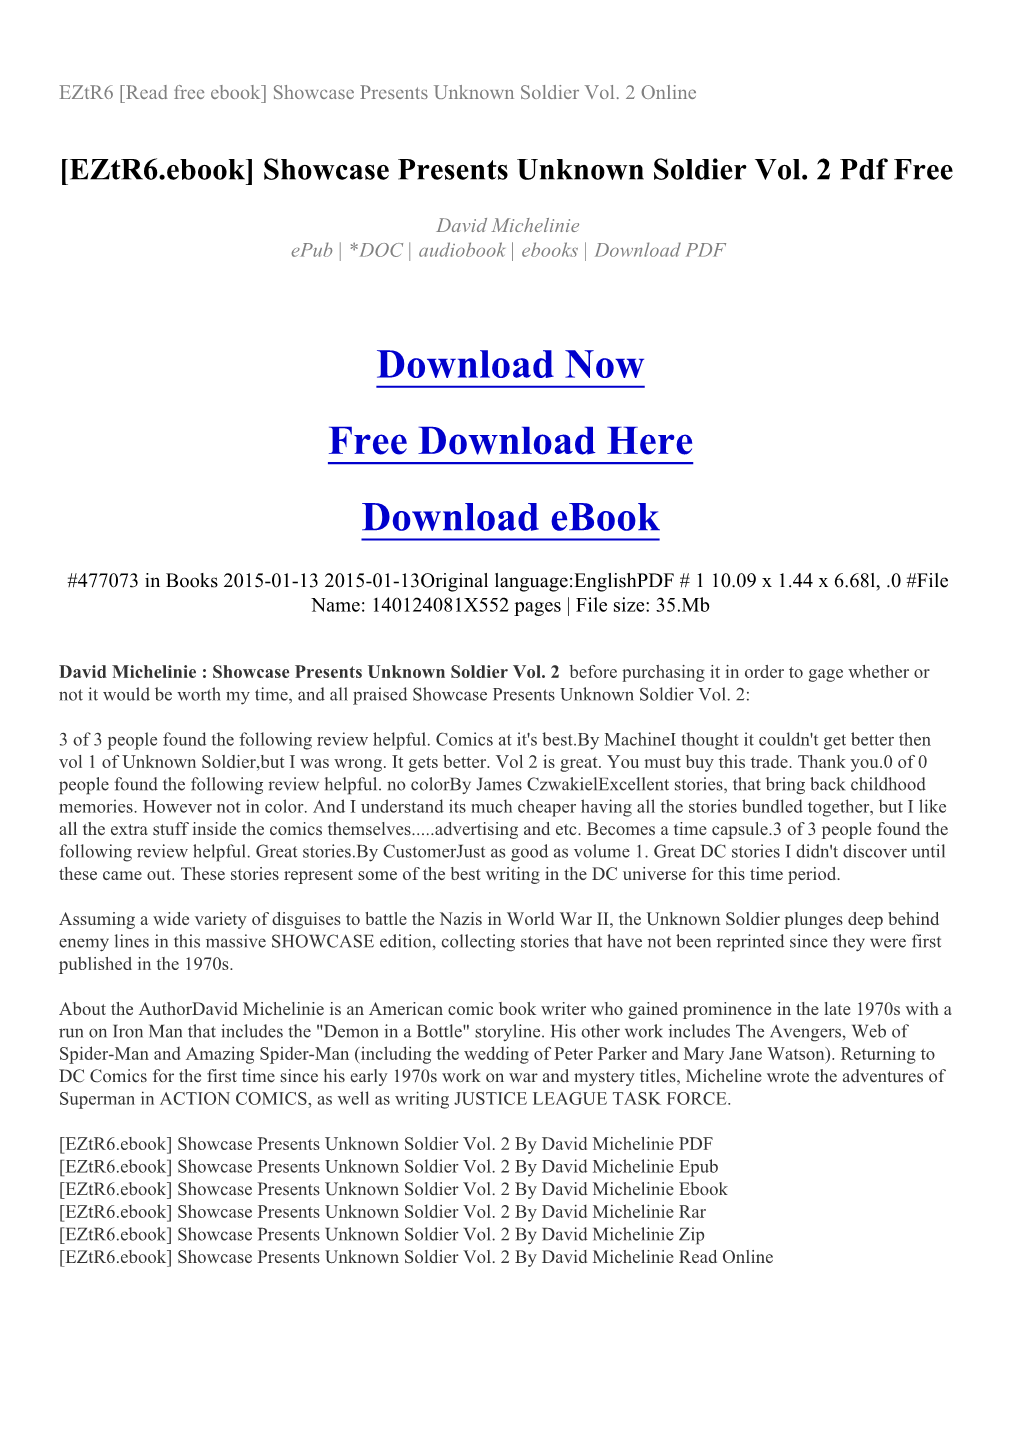 [Eztr6.Ebook] Showcase Presents Unknown Soldier Vol. 2 Pdf Free